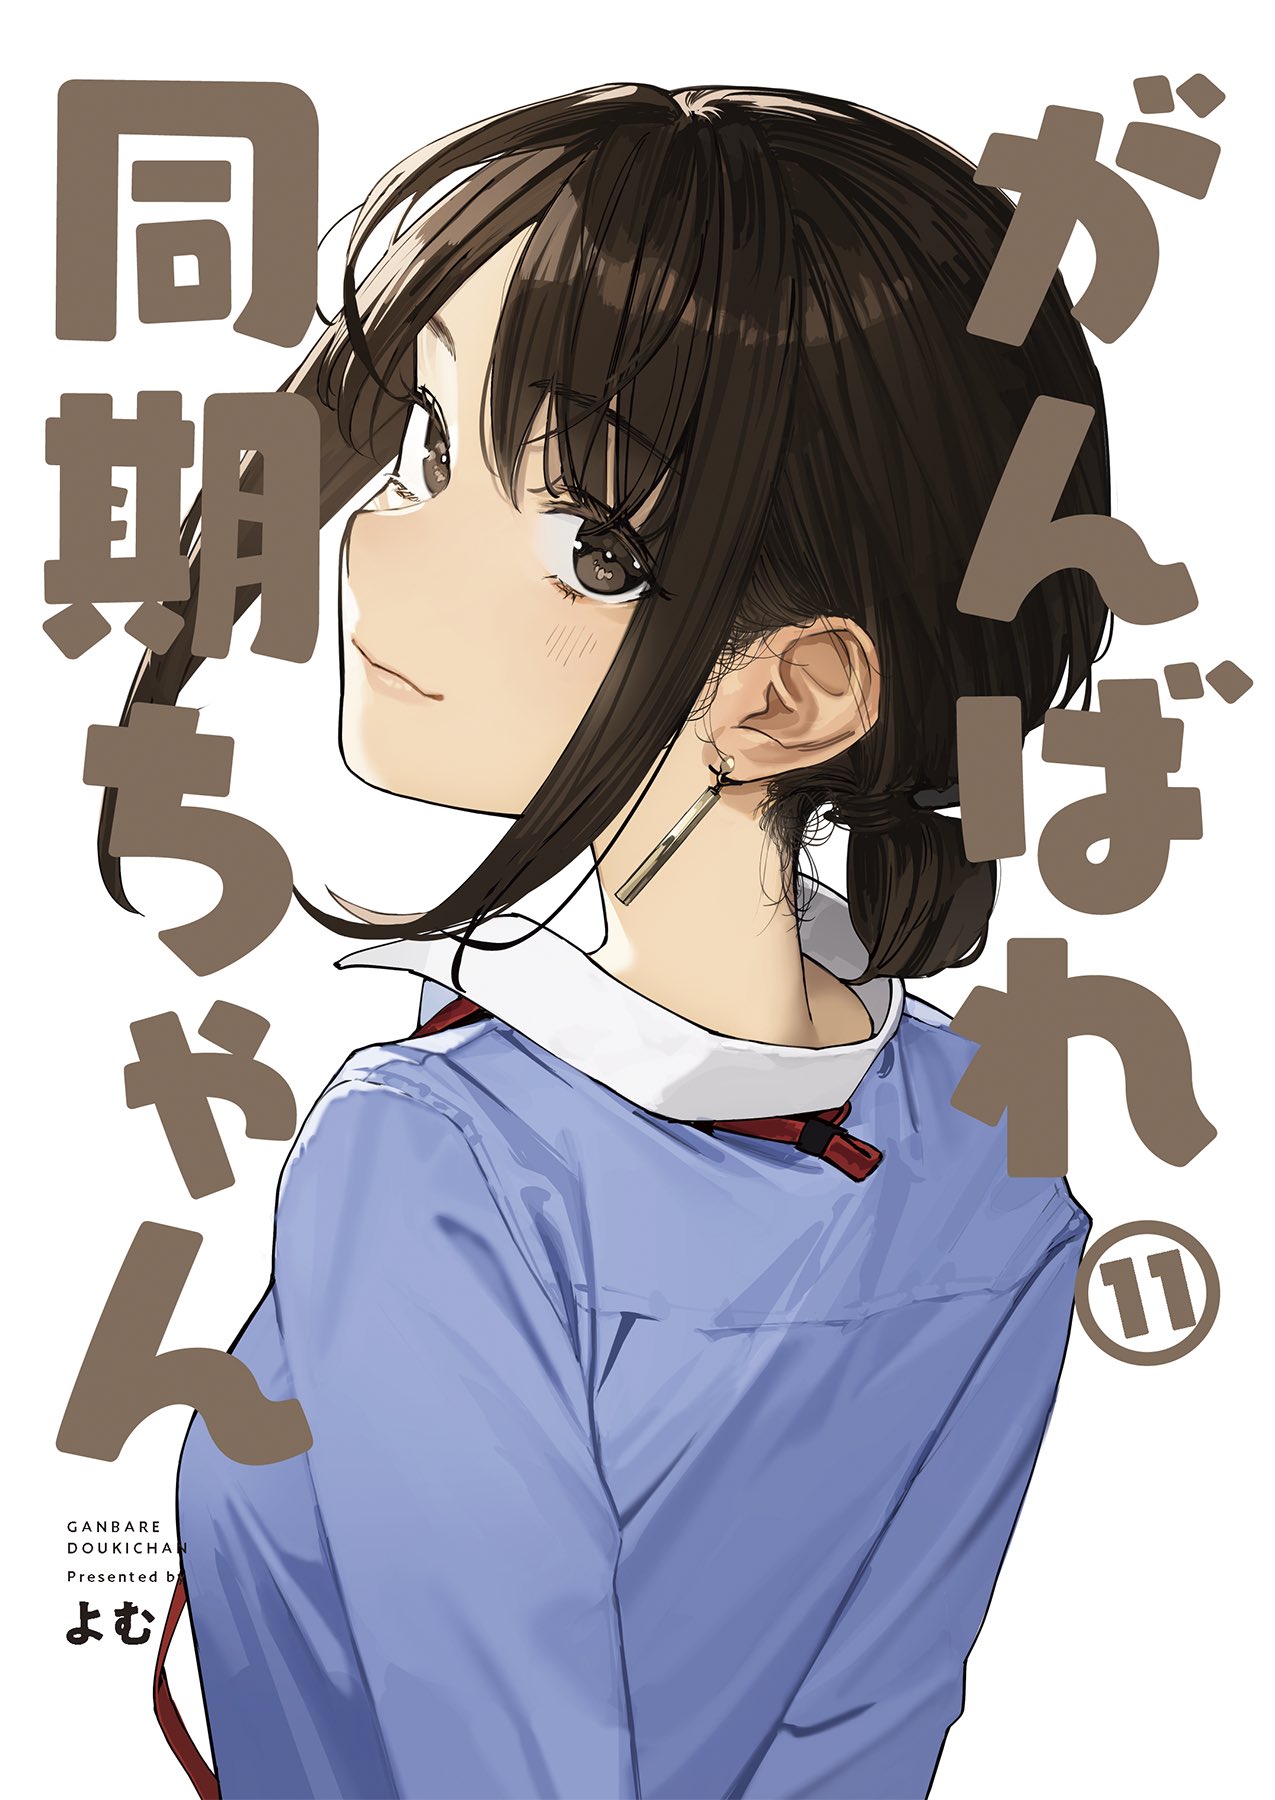 Ganbare Doukichan Twitter Manga Gets Web Anime Adaptation